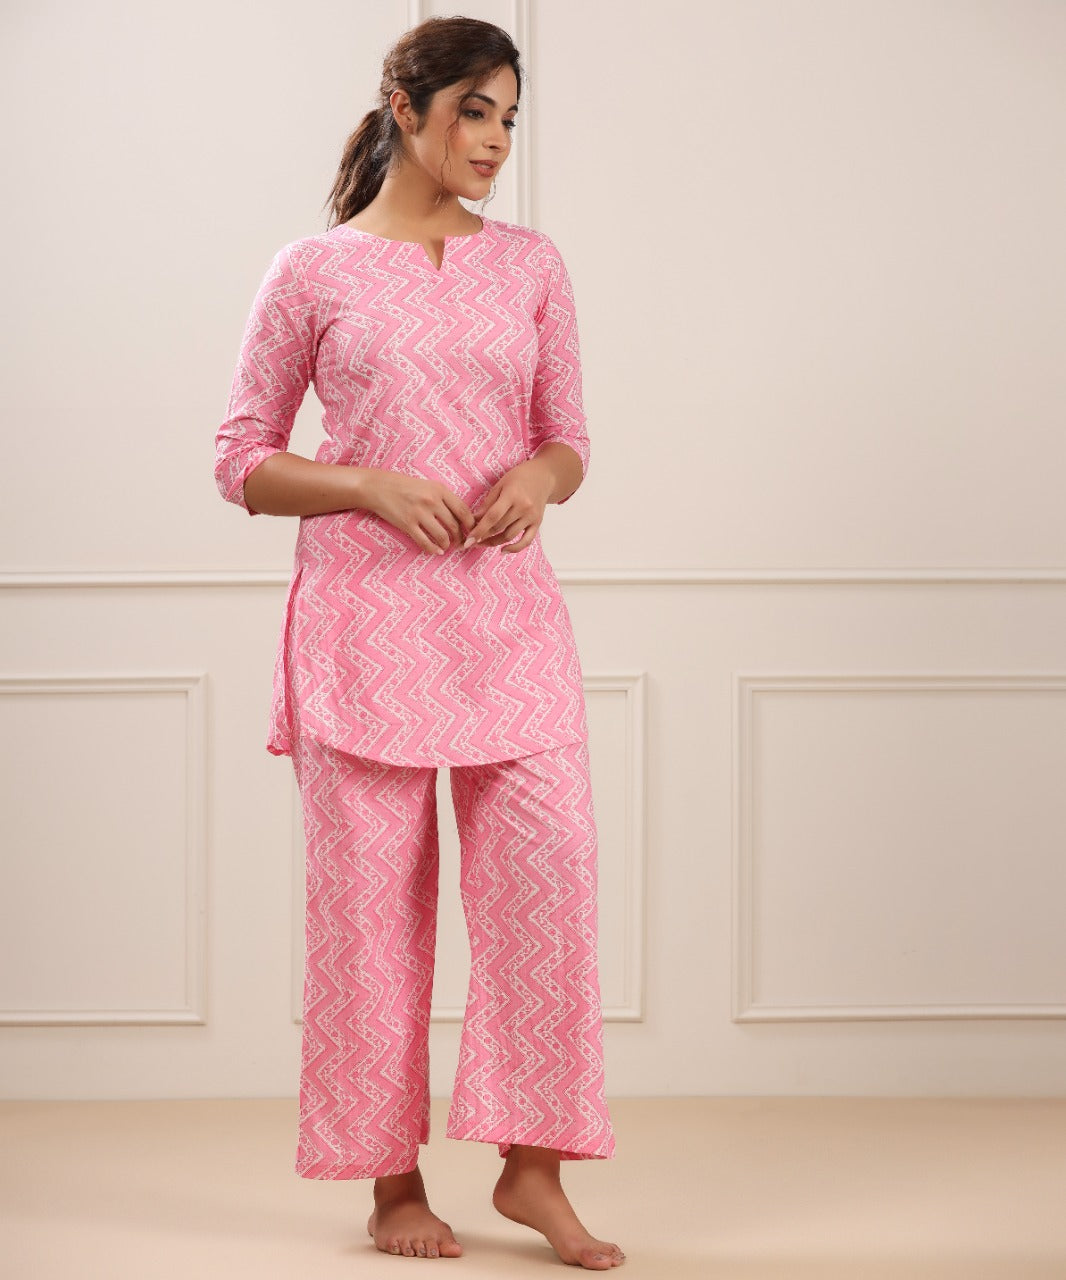 Patterned Zigzag on Cotton Pink loungewear set